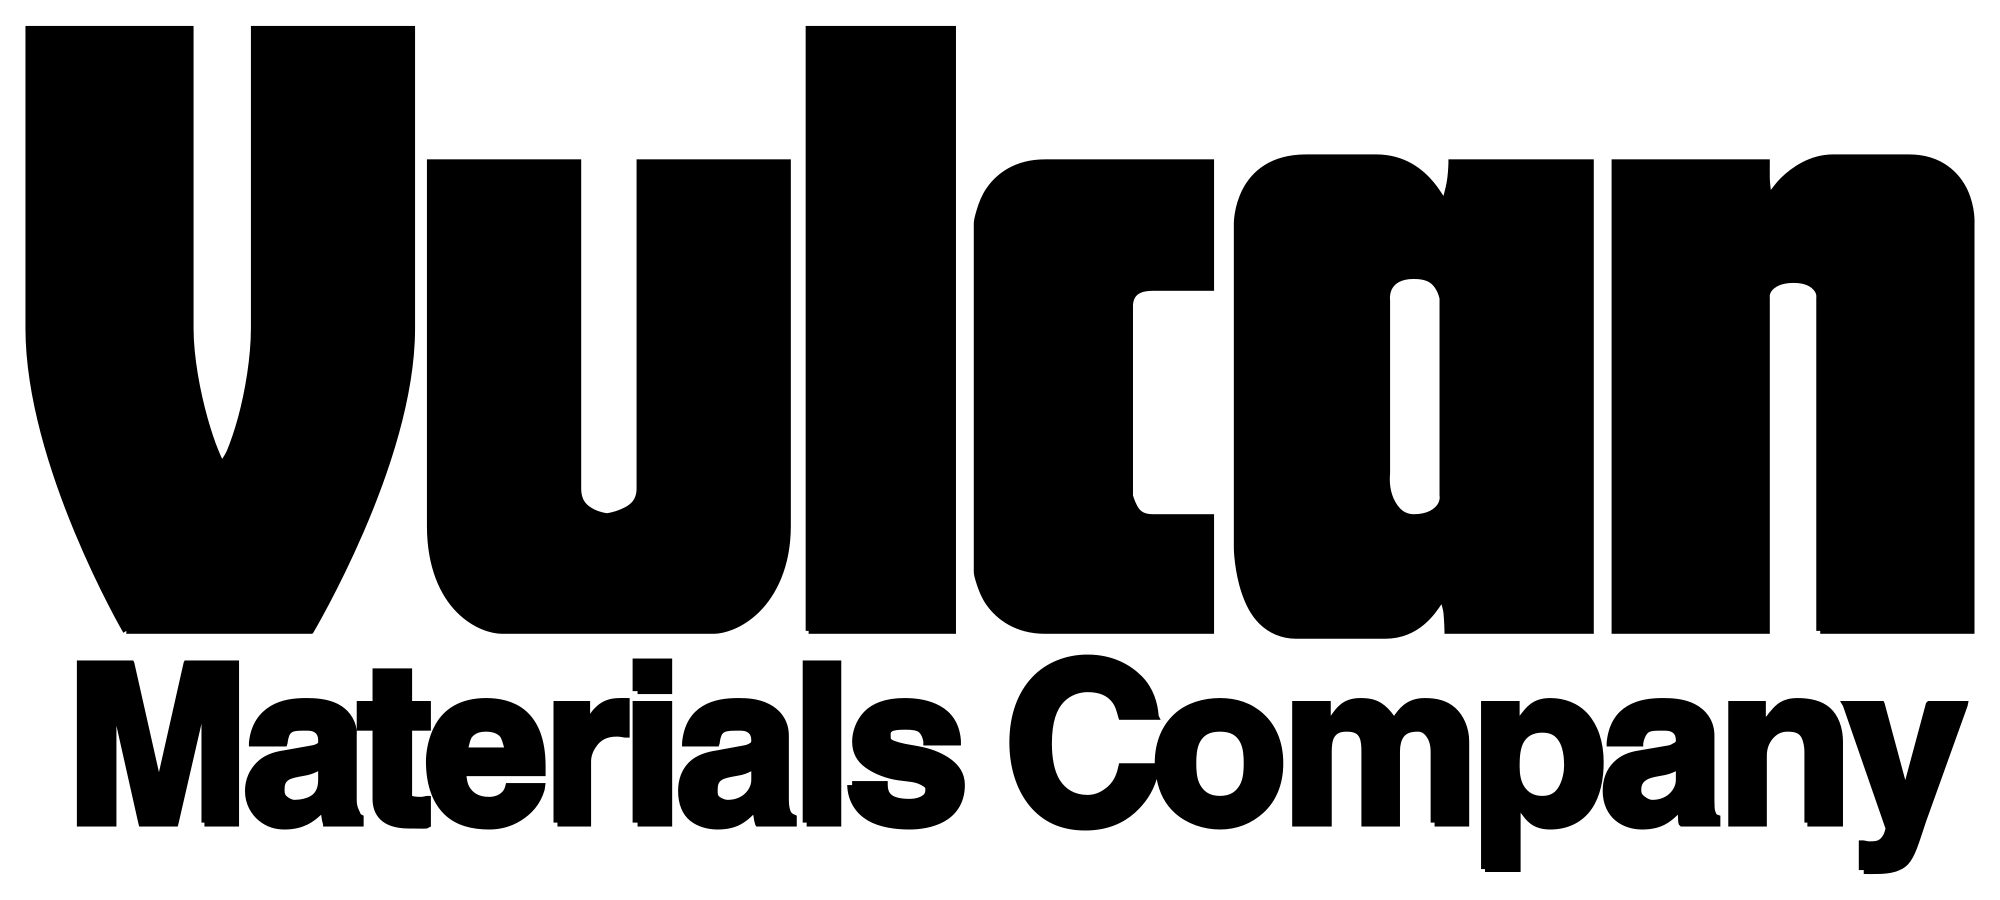 Vulcan Logo - File:Vulcan Materials logo.svg - Wikimedia Commons